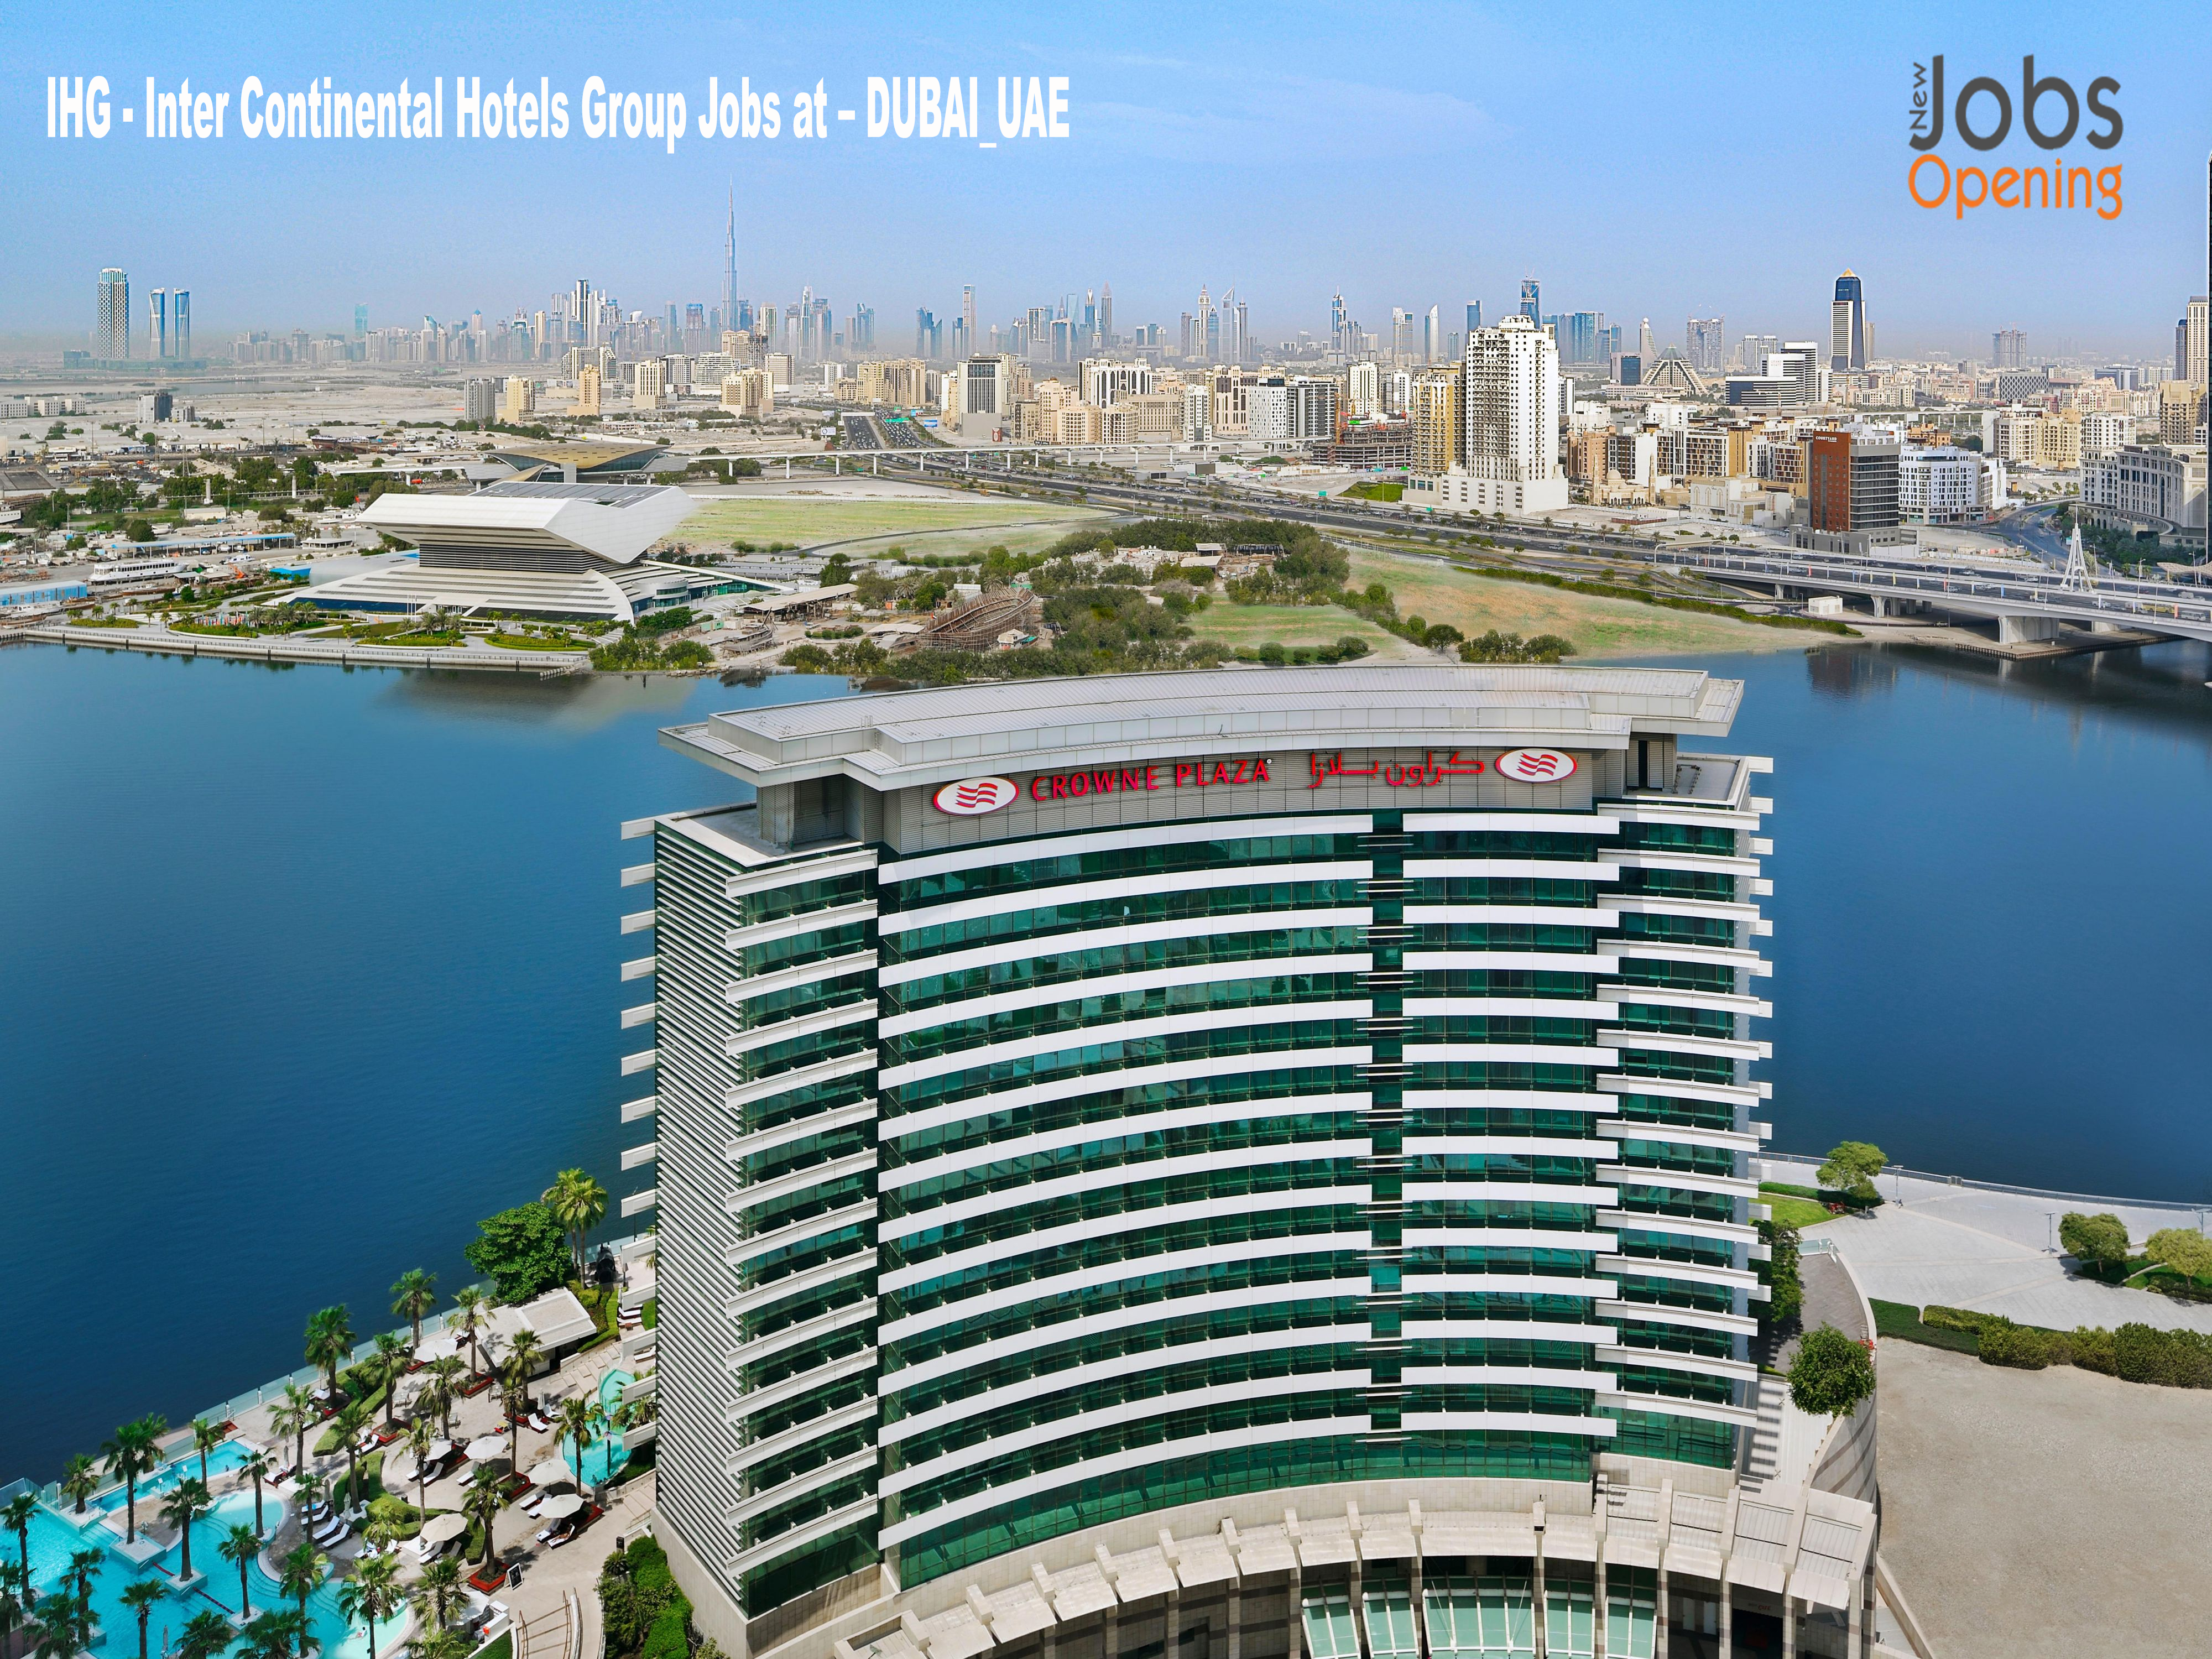 IHG - Inter Continental Hotels Group Jobs at – DUBAI_UAE